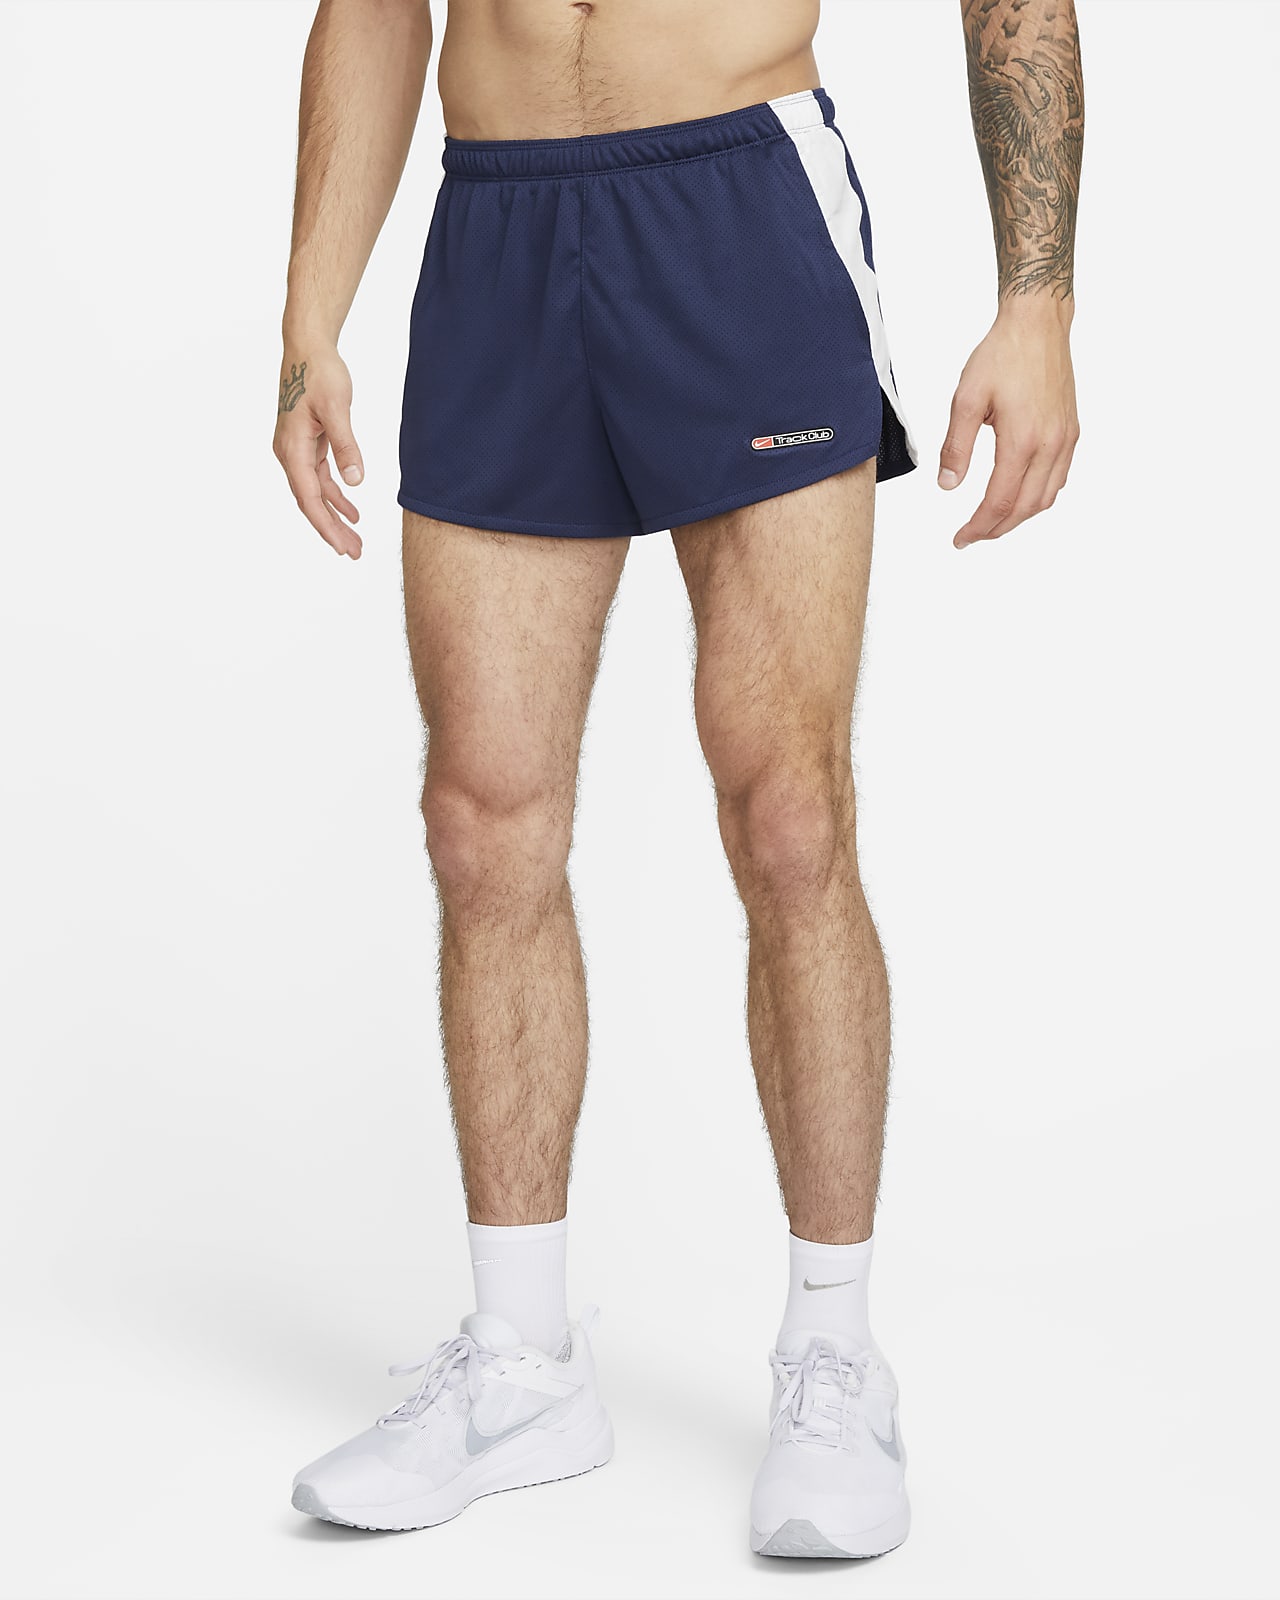 Nike Sportswear Loose Fit Convertible Pants Black Mens Size Medium  CK0523-010 | eBay